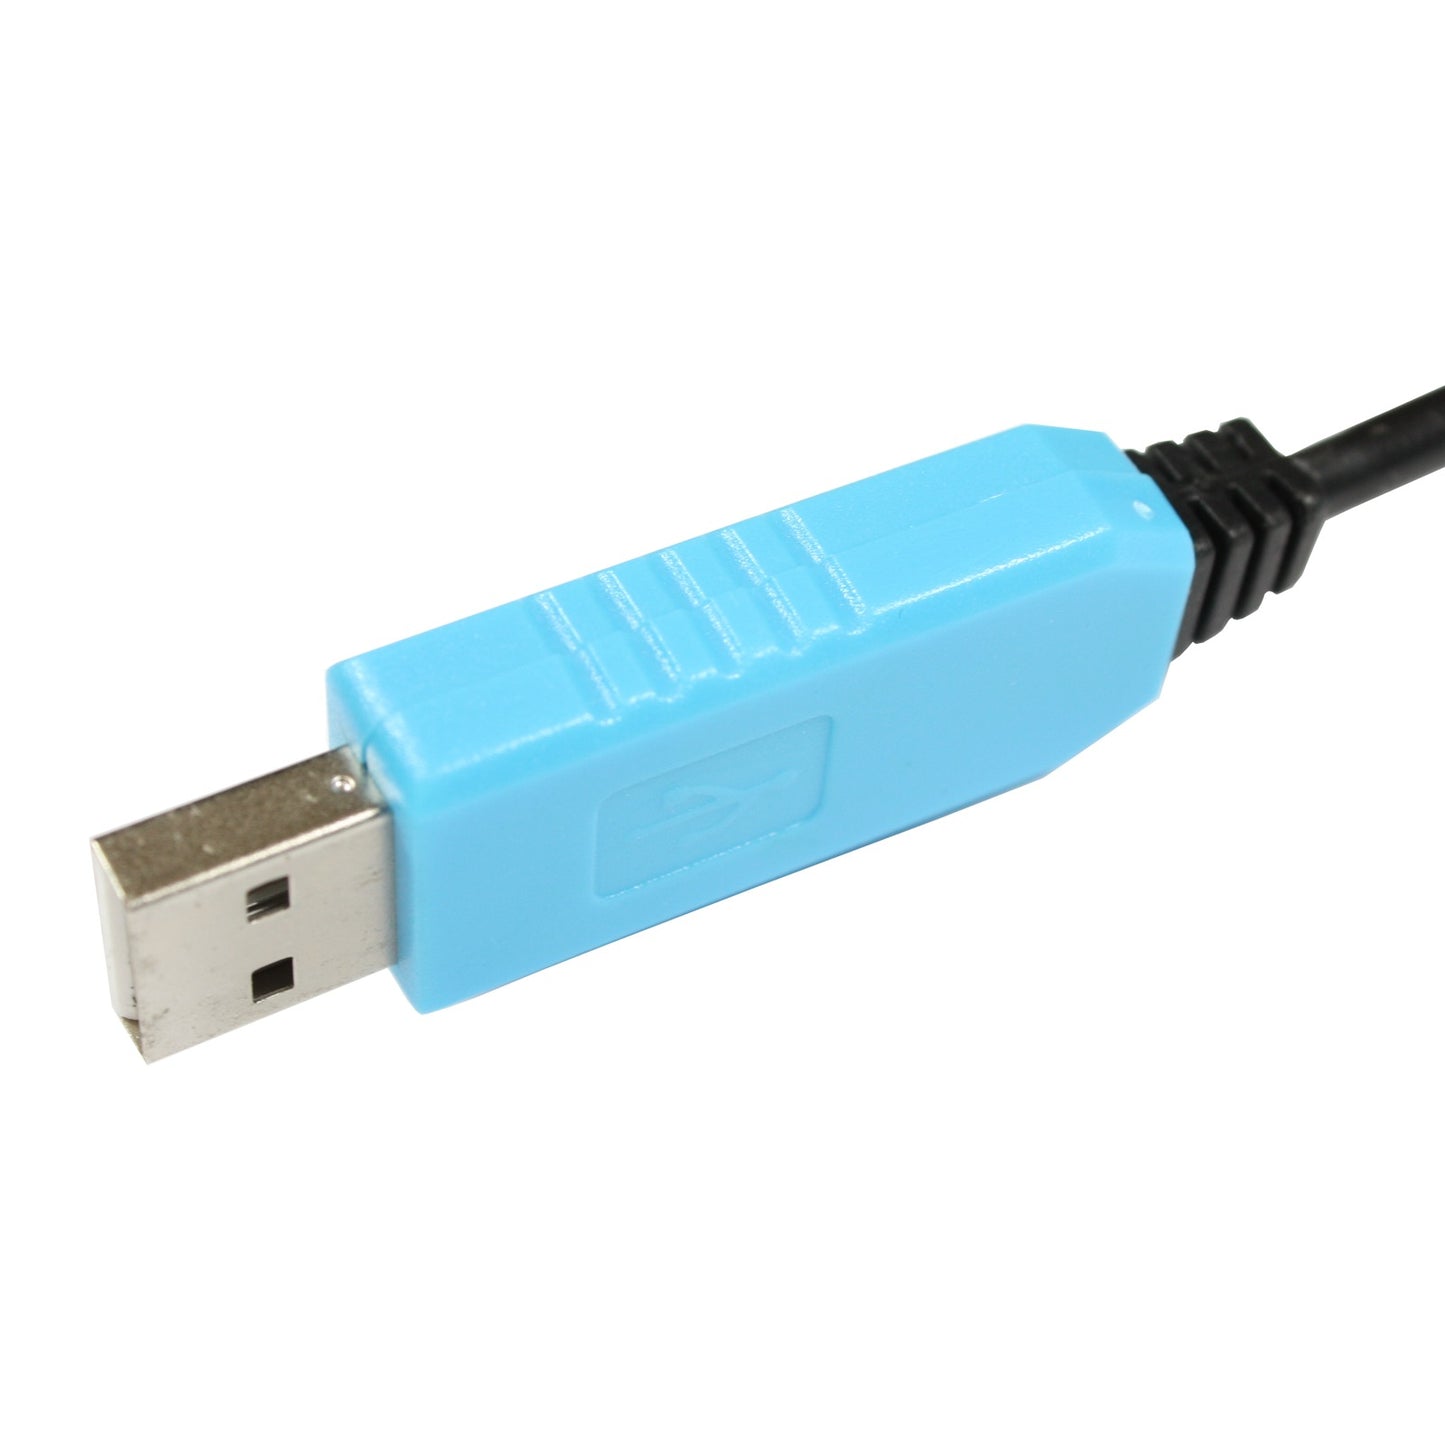 USB zu TTL, UART-Wandler-Kabel, serielle Schnittstelle, PL2303TA kompatibel